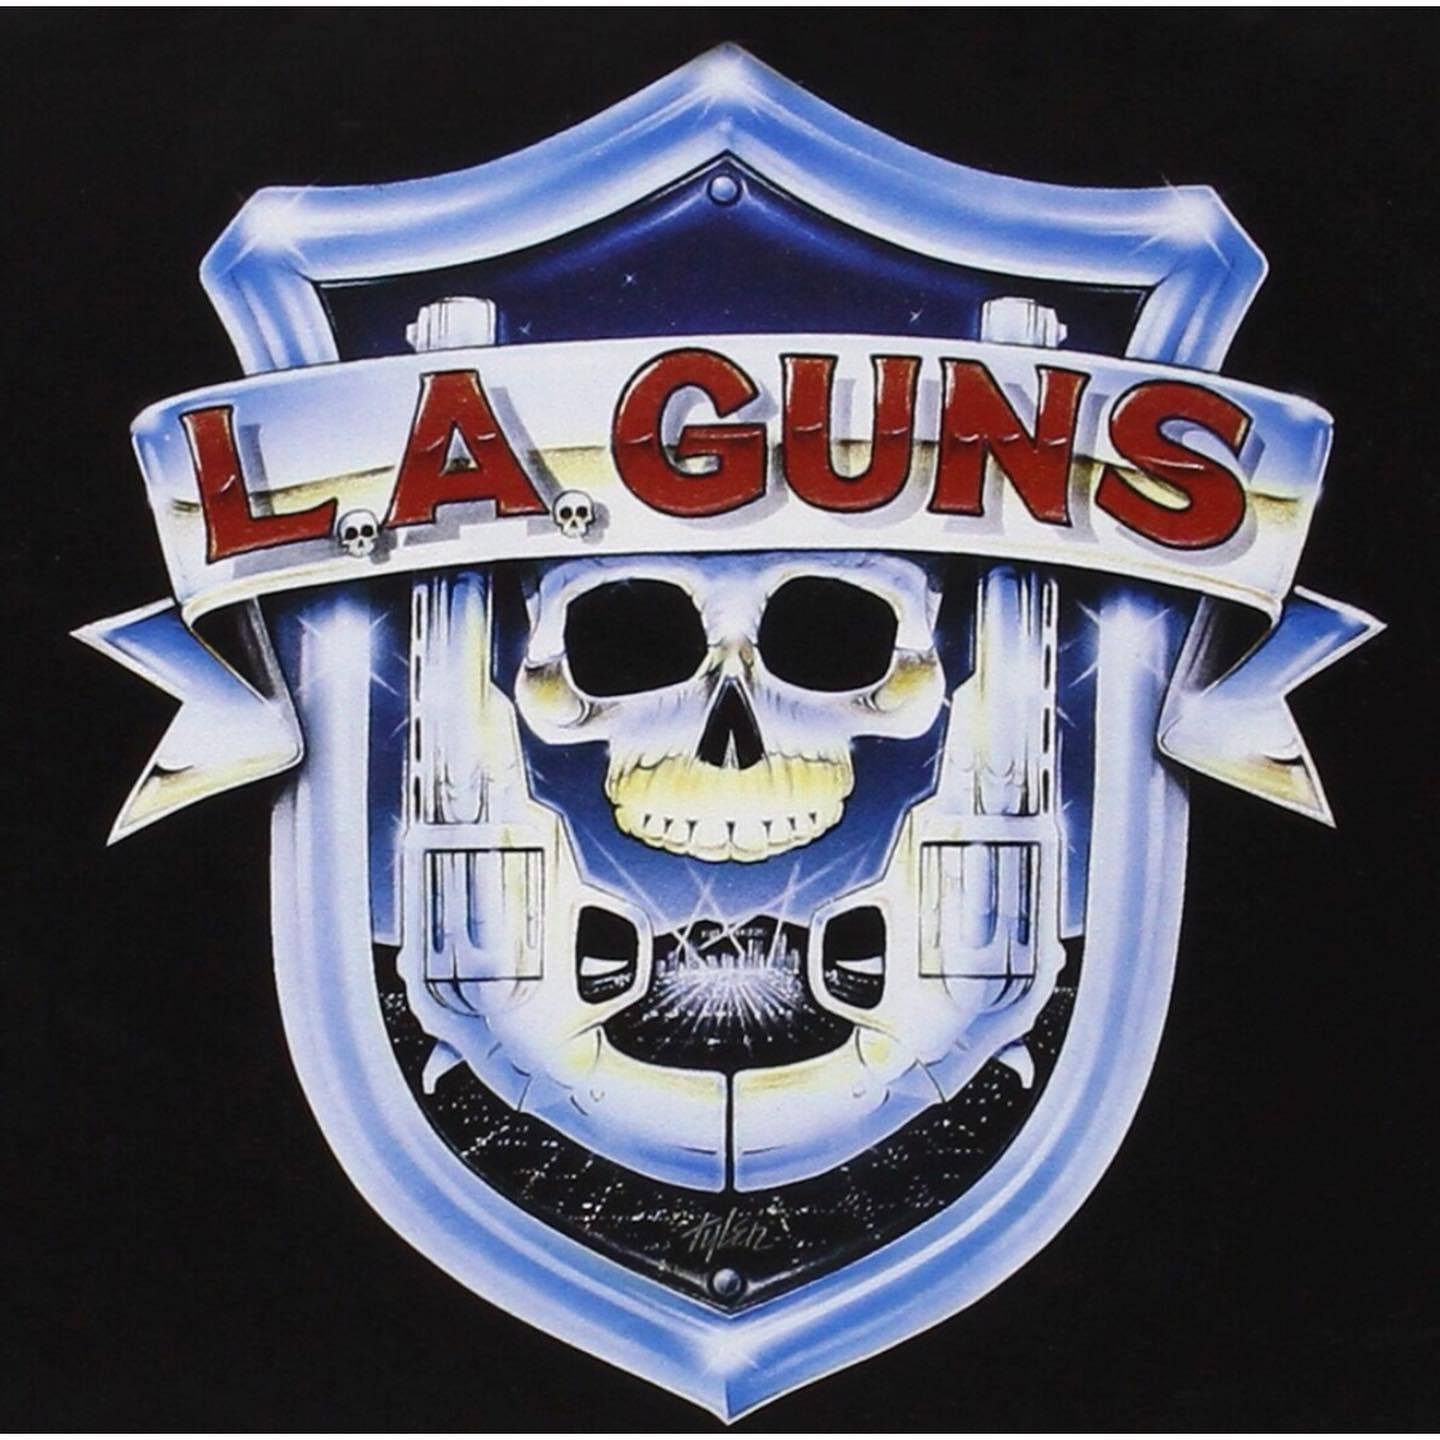 L.A. Guns Featuring Tracii Guns & Phil Lewis To Release New Album “Black Diamonds”